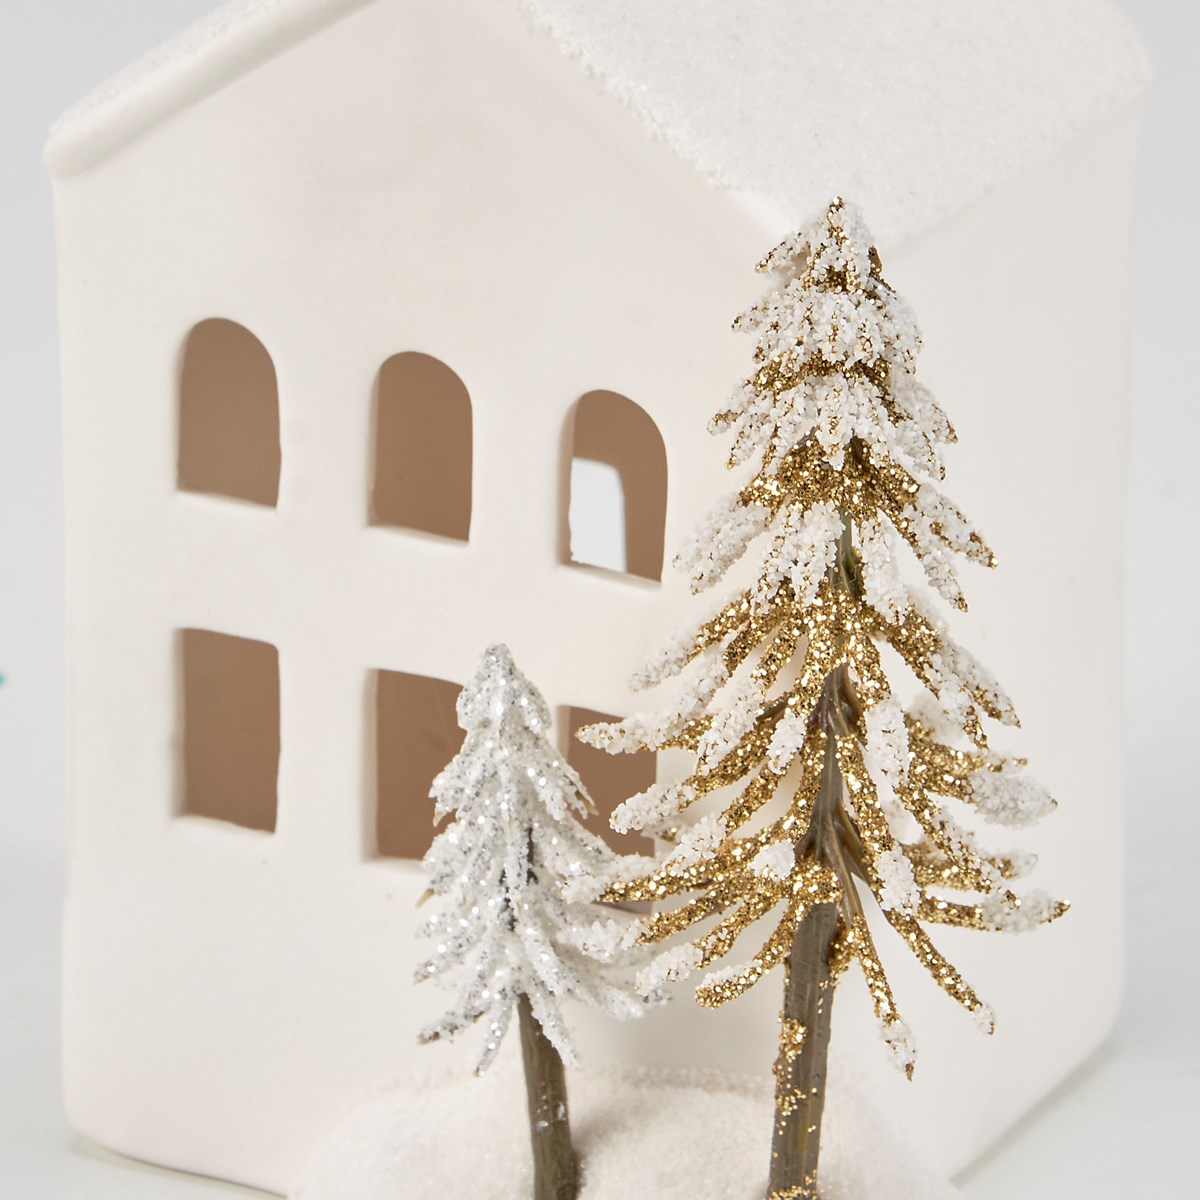 Lighted Winter House Figurine - Stoneware